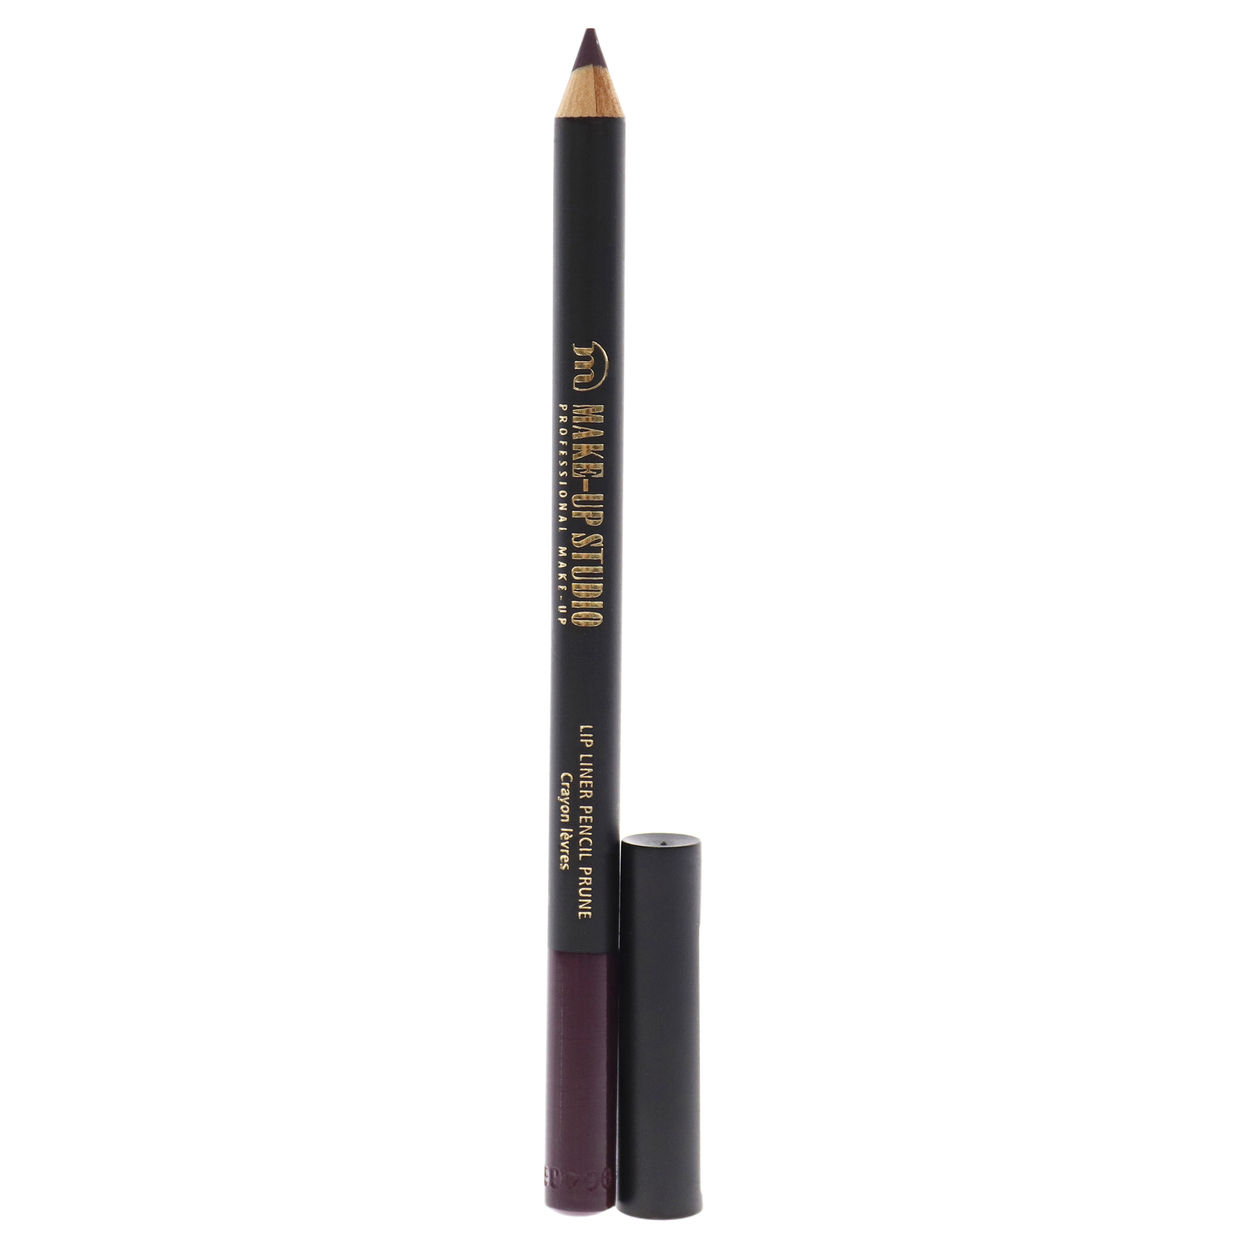 Make-Up Studio Lip Liner Pencil - 10 Prune 0.04 Oz